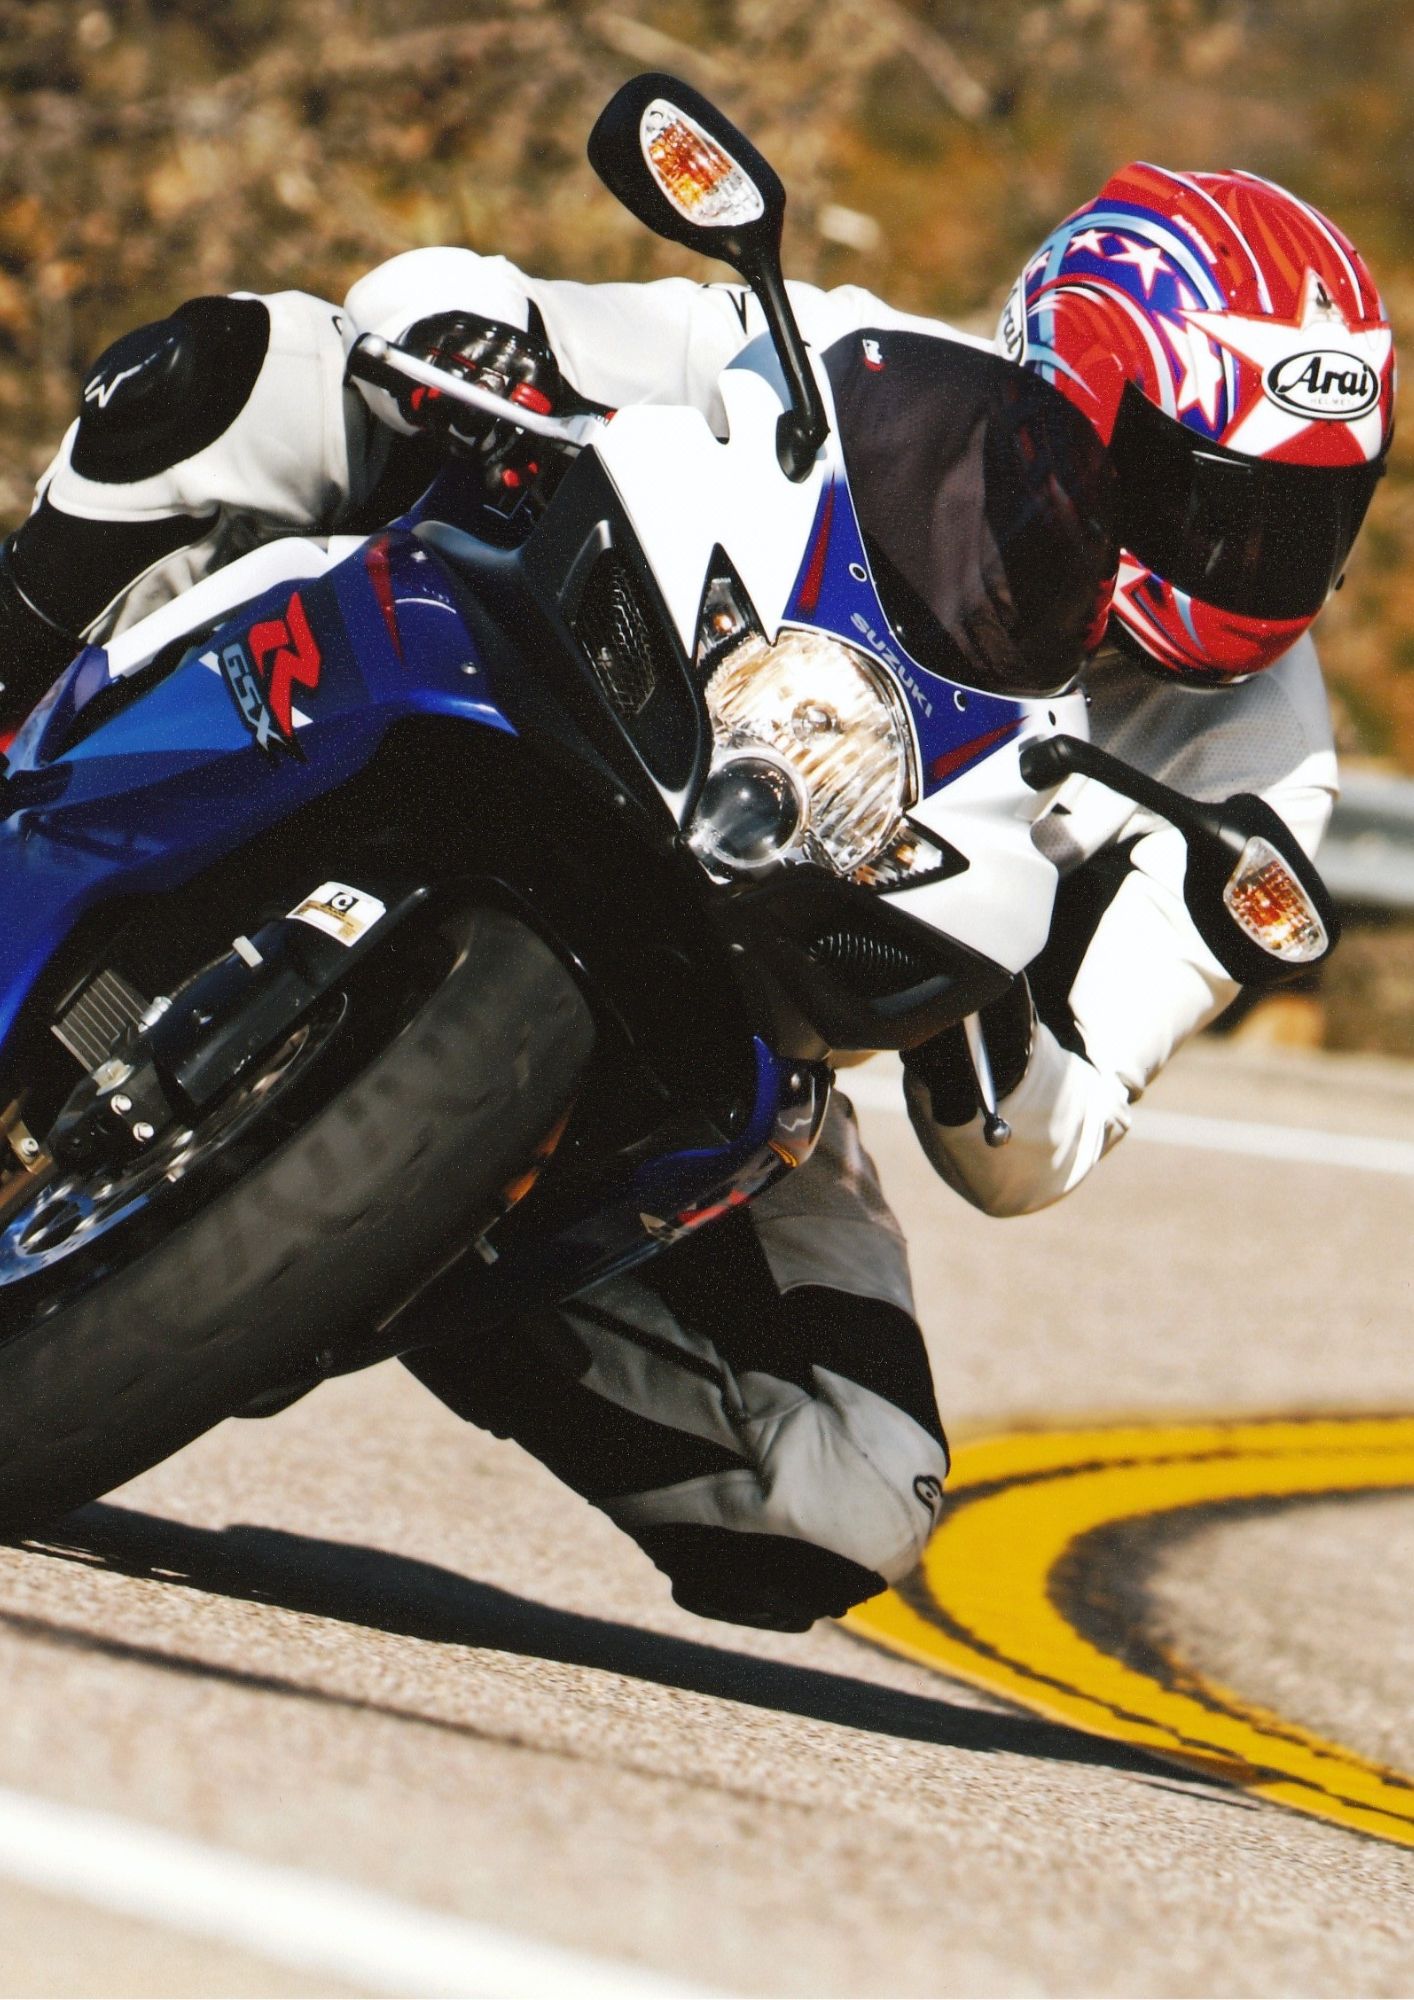 moto sport 